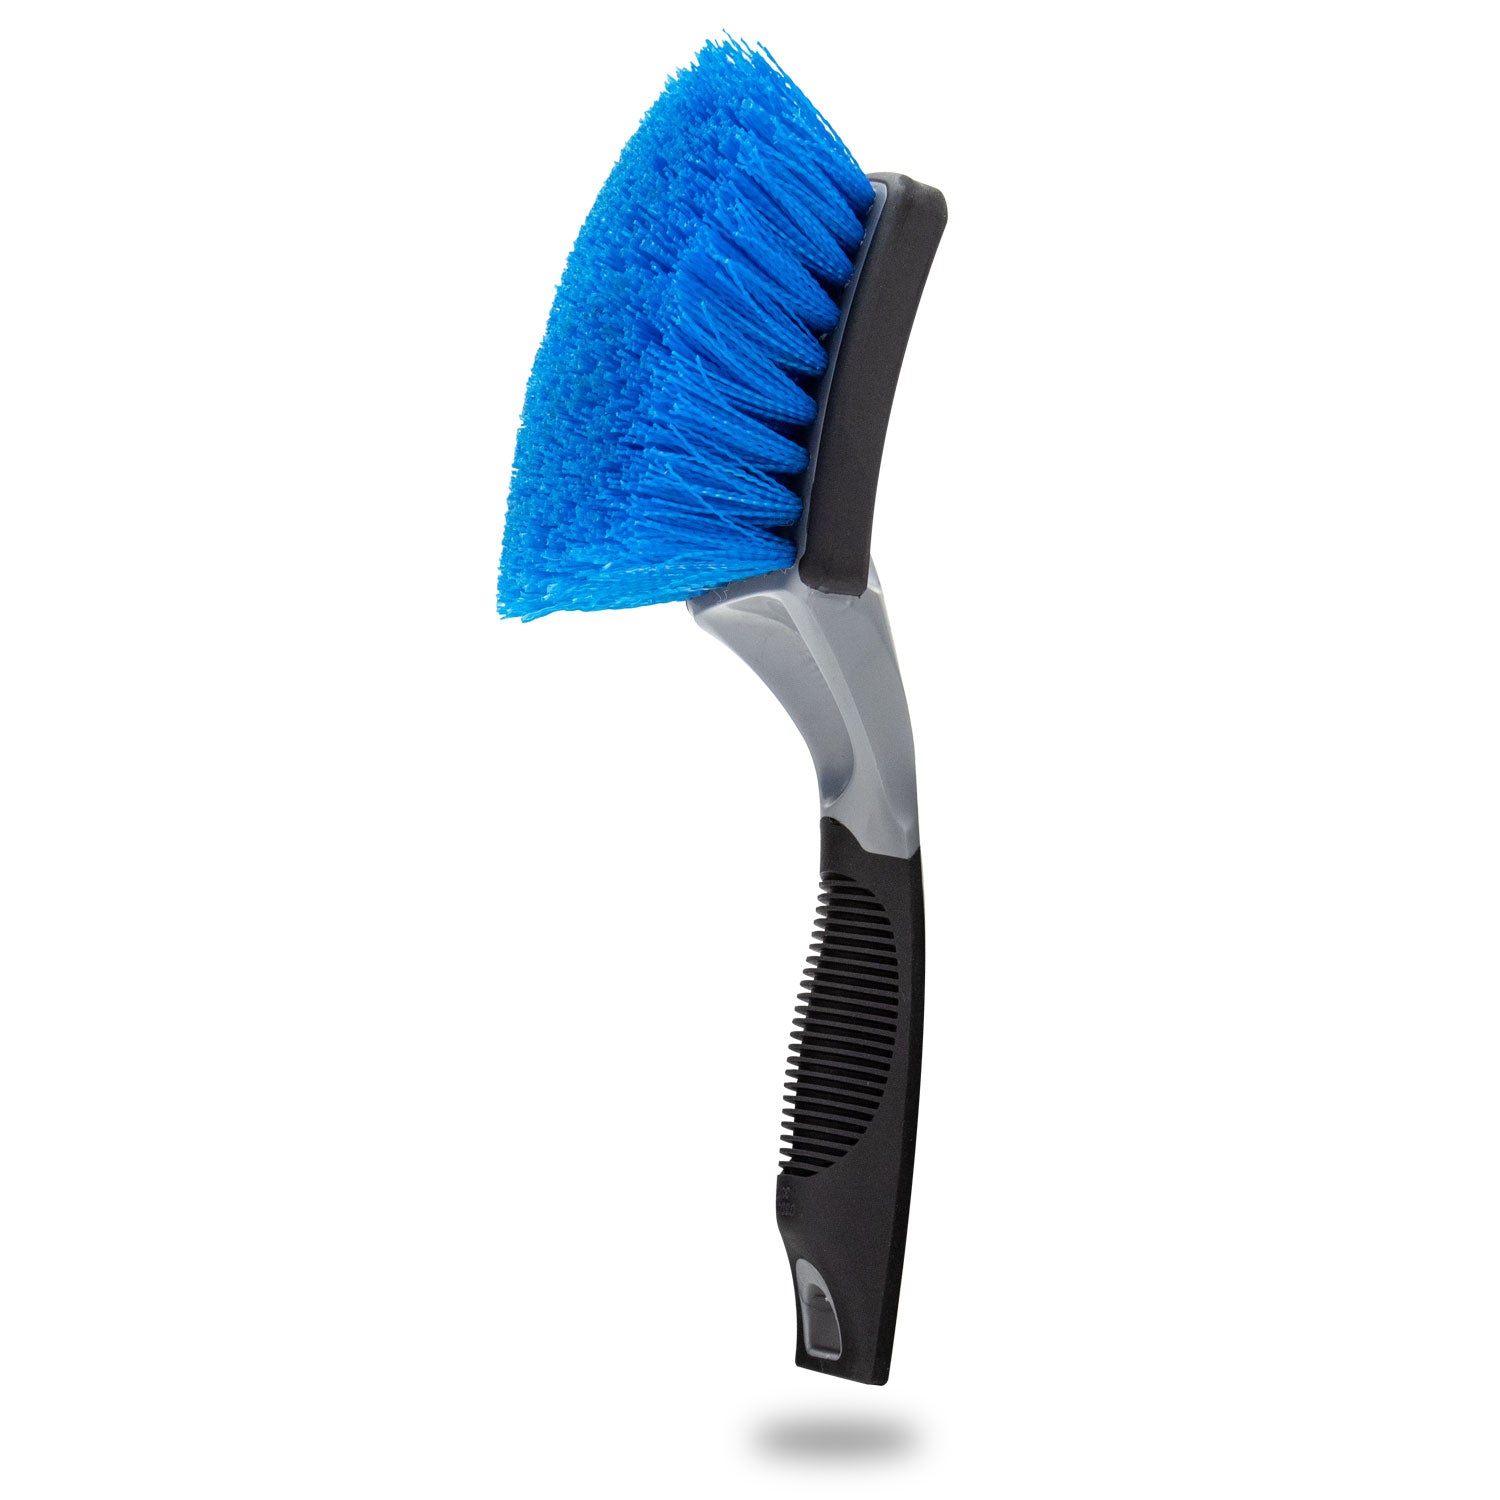 Rim Cleaning Brush - 10in Long, Soft Grip, Ergonomic Handle